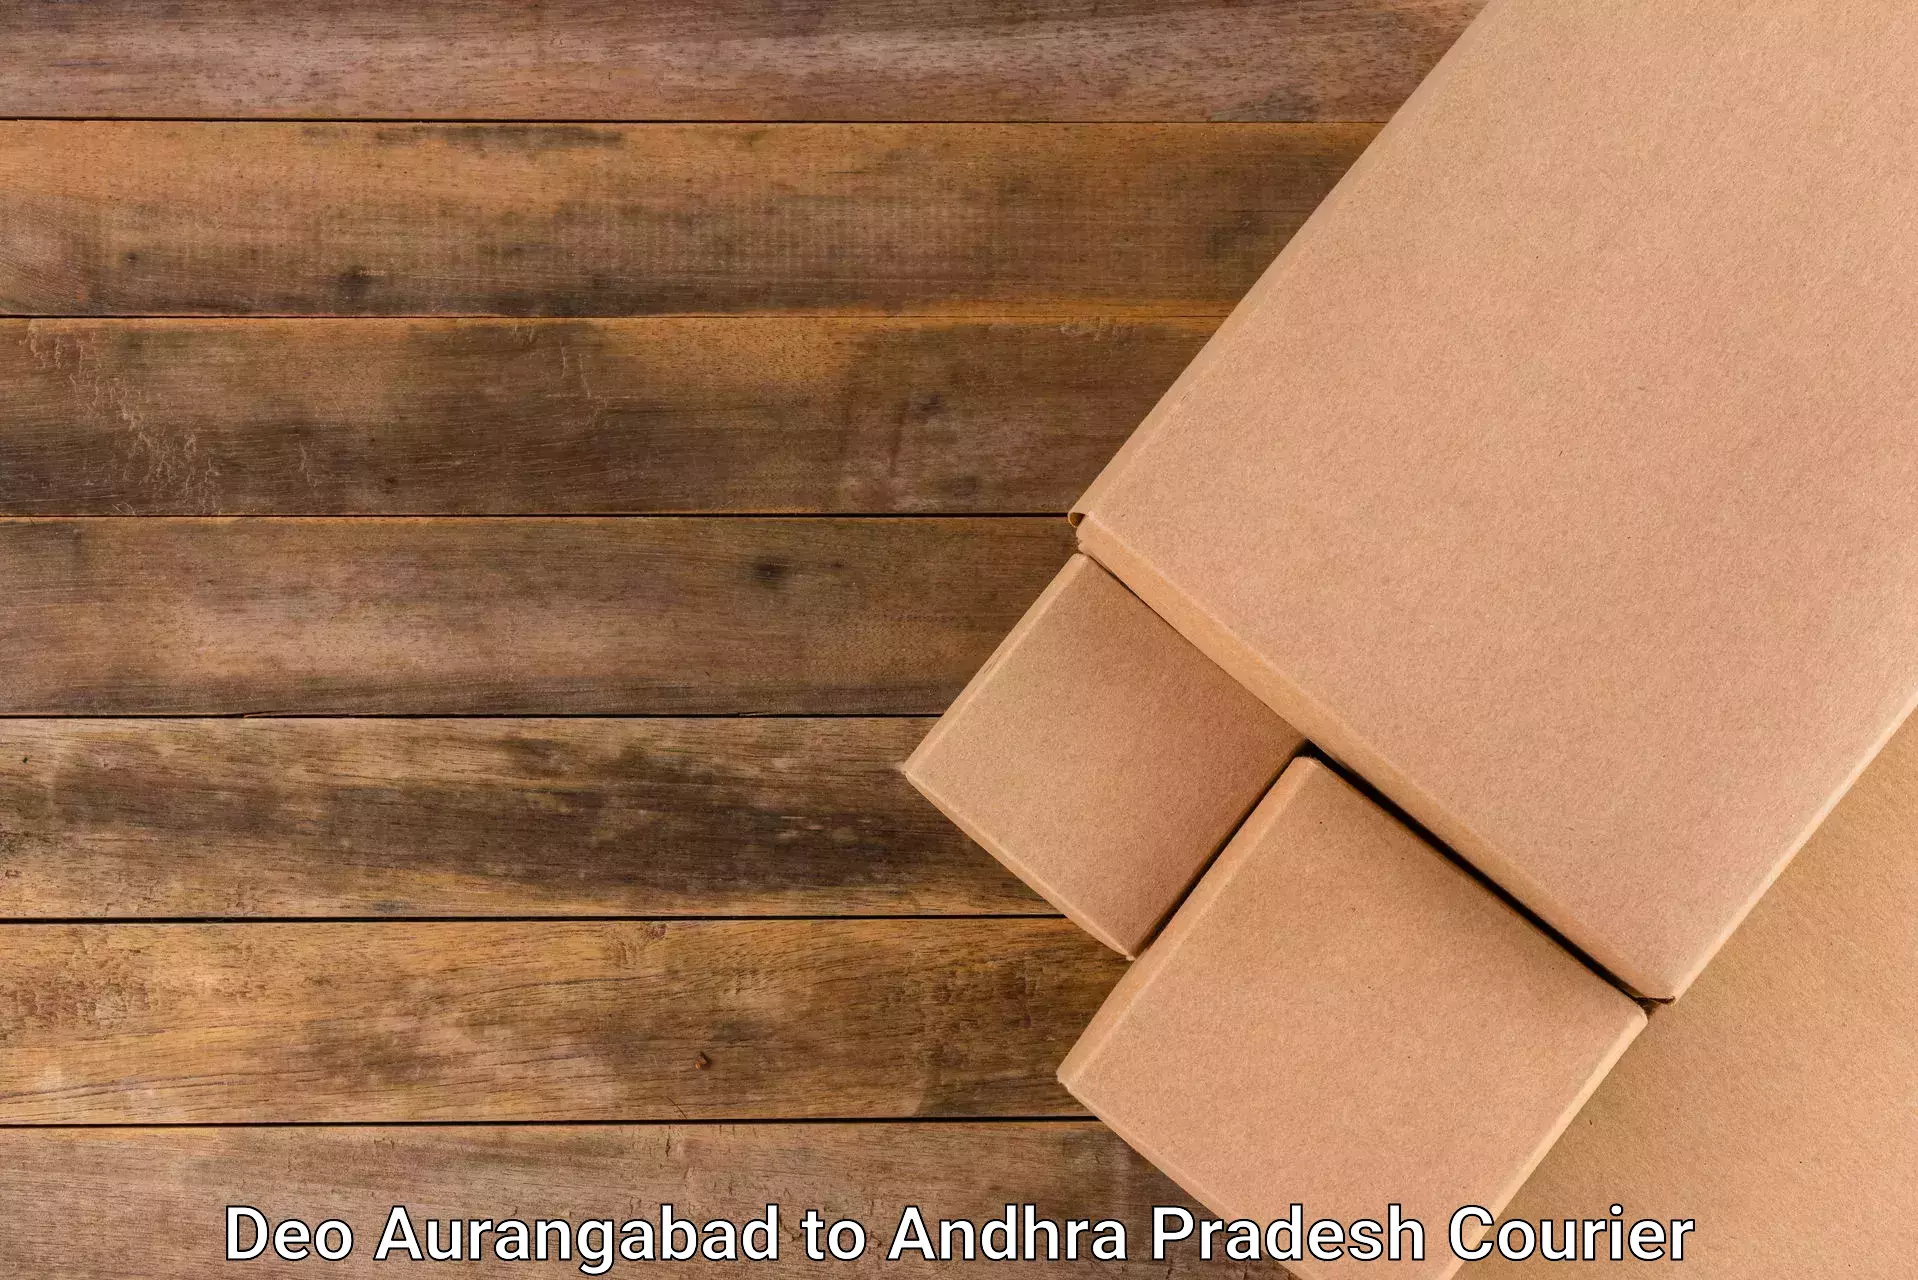 Express courier capabilities Deo Aurangabad to Andhra Pradesh